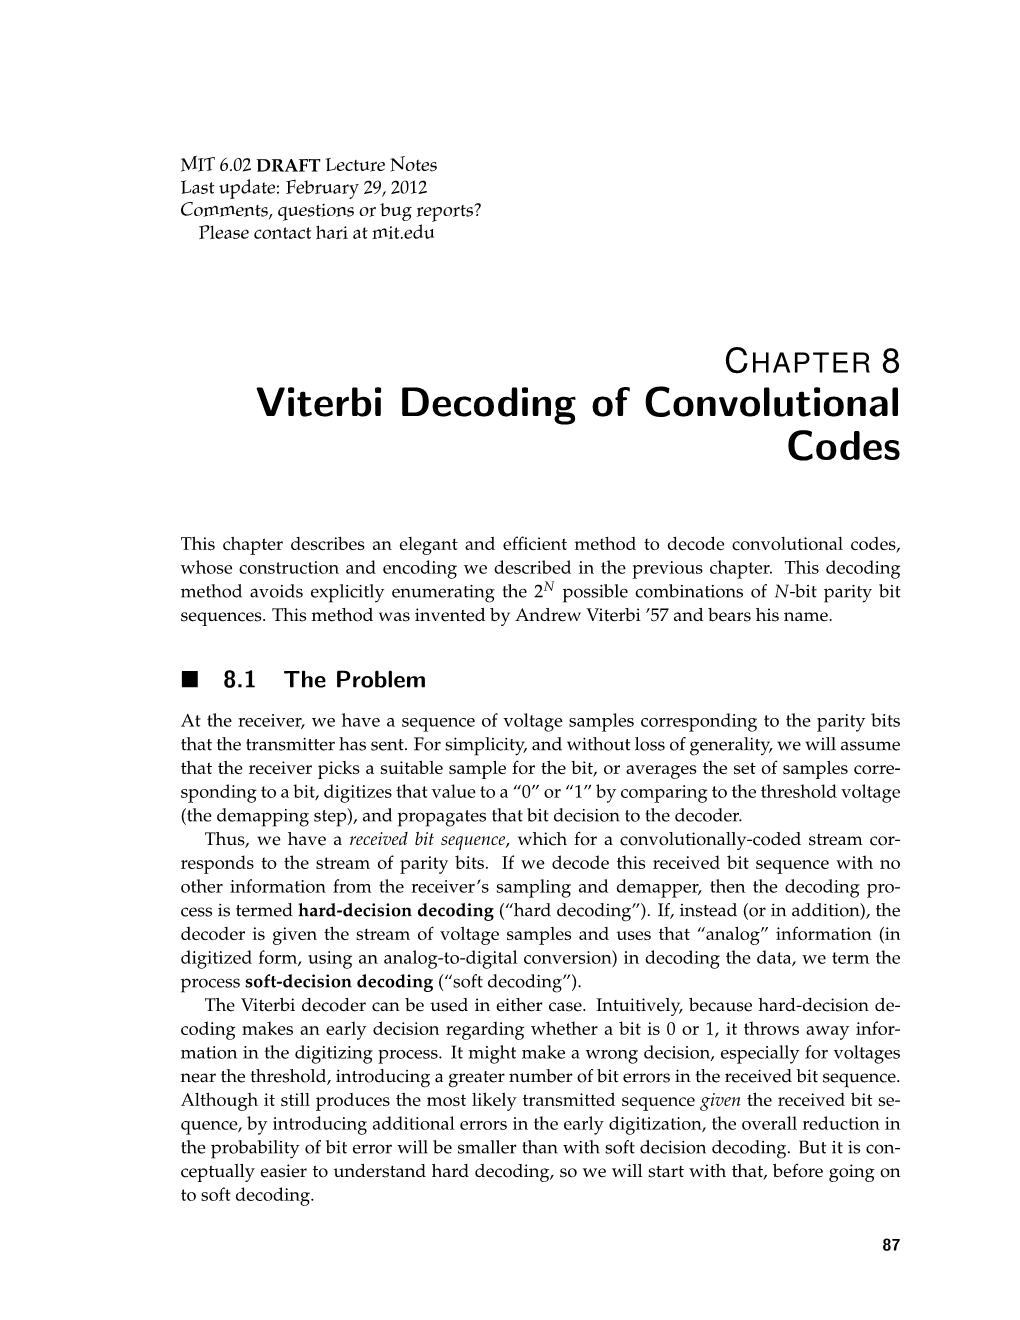 Viterbi Decoding of Convolutional Codes